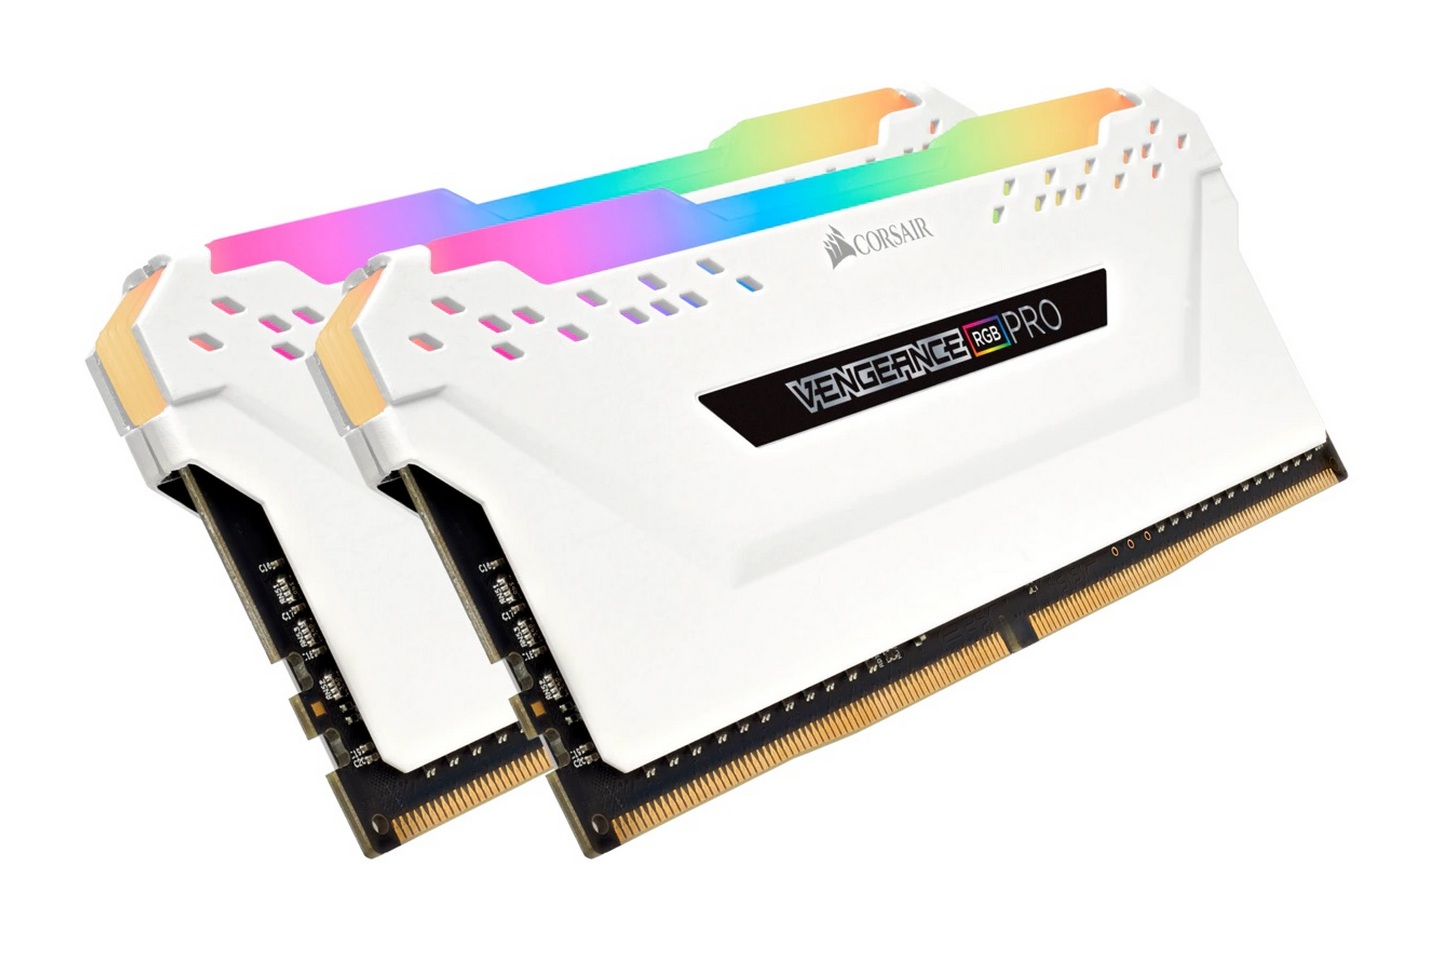 Vengeance RGB Pro White 16GB (2x8GB) DDR4 3200MHz